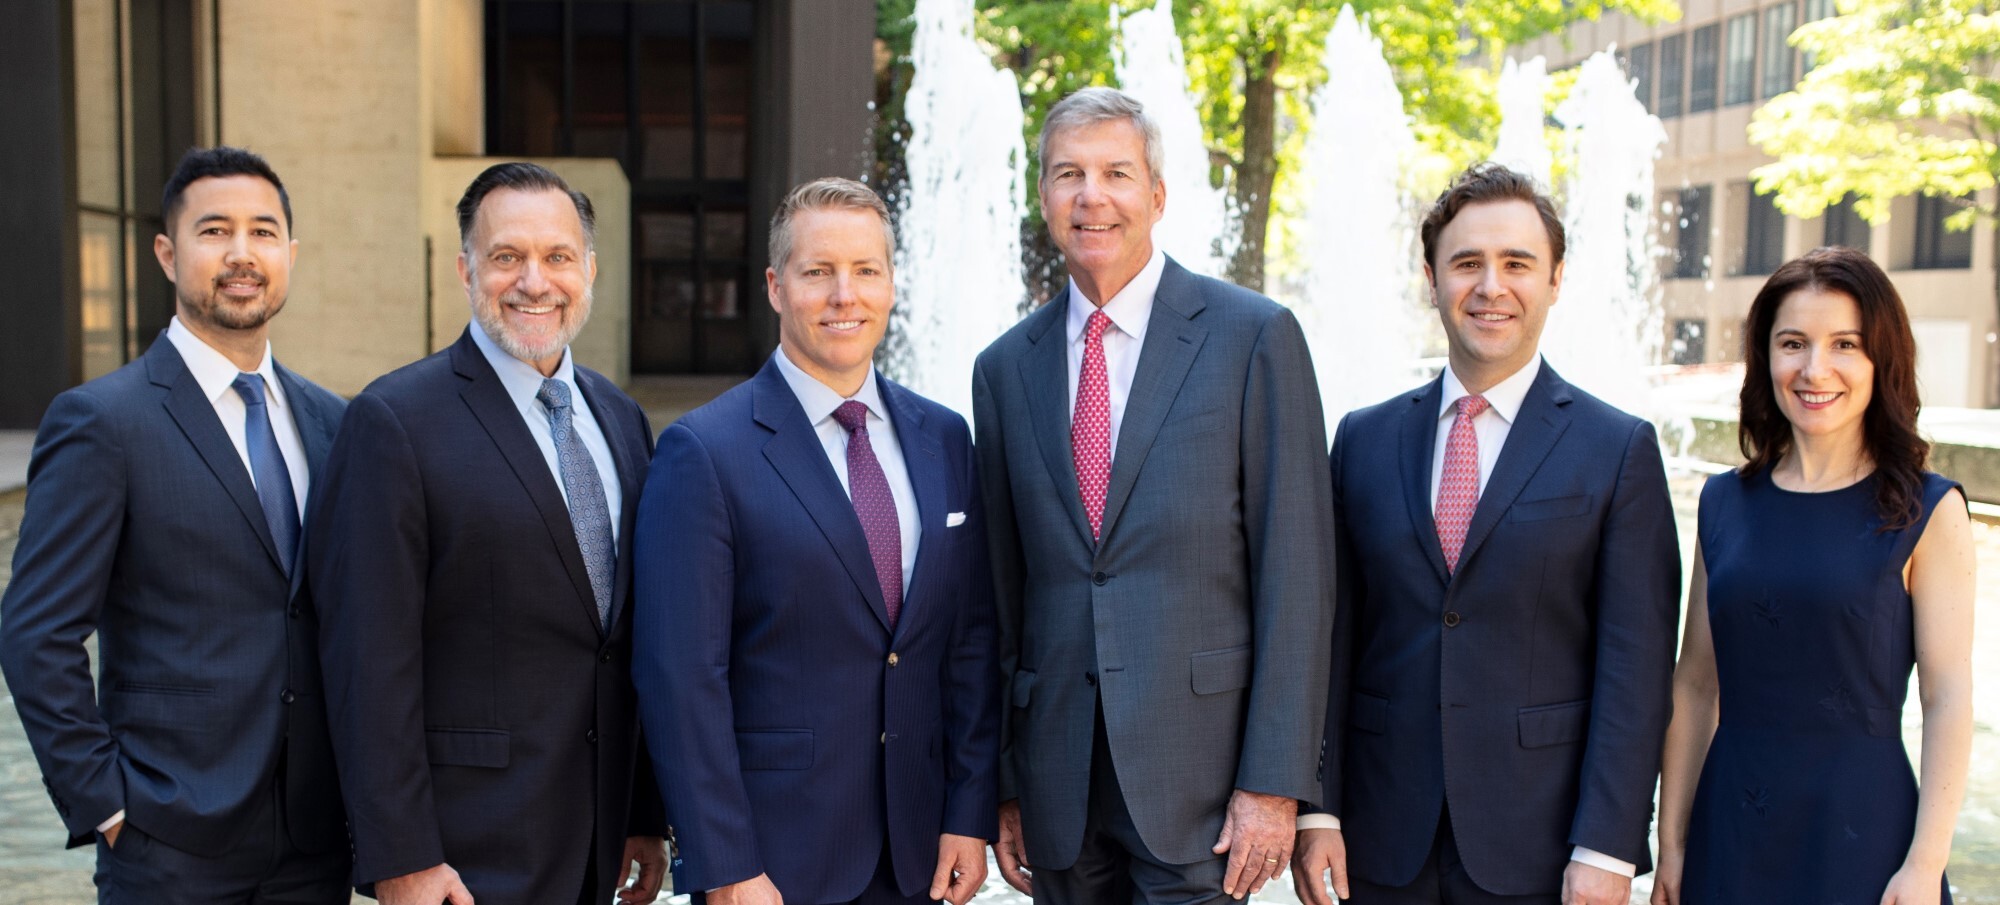 Prentis Wealth Management Group team